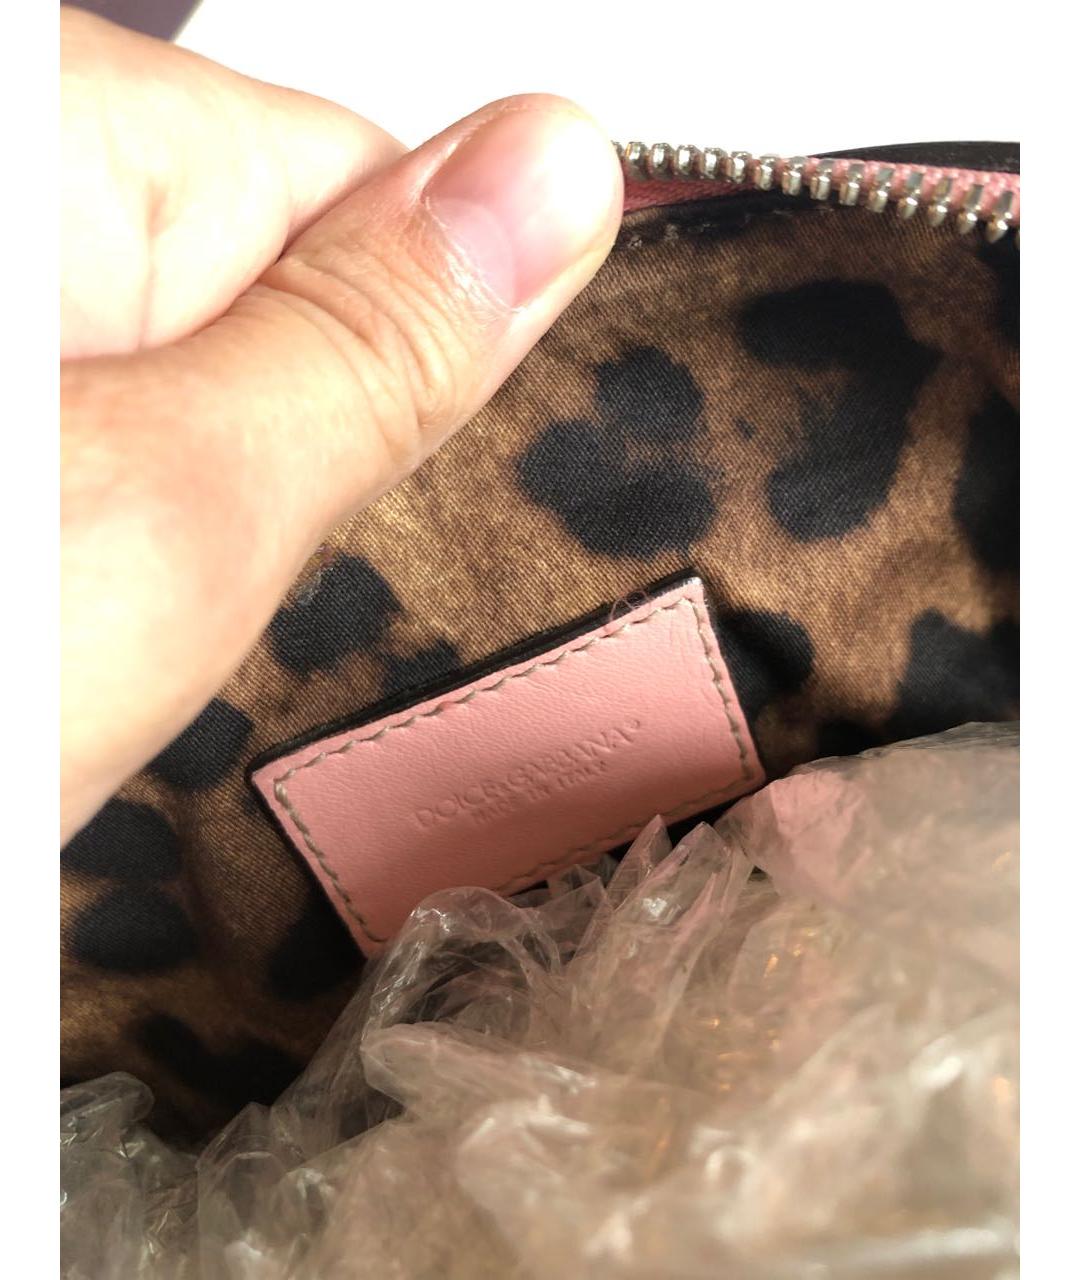 DOLCE&GABBANA Розовая кожаная сумка с короткими ручками, фото 7